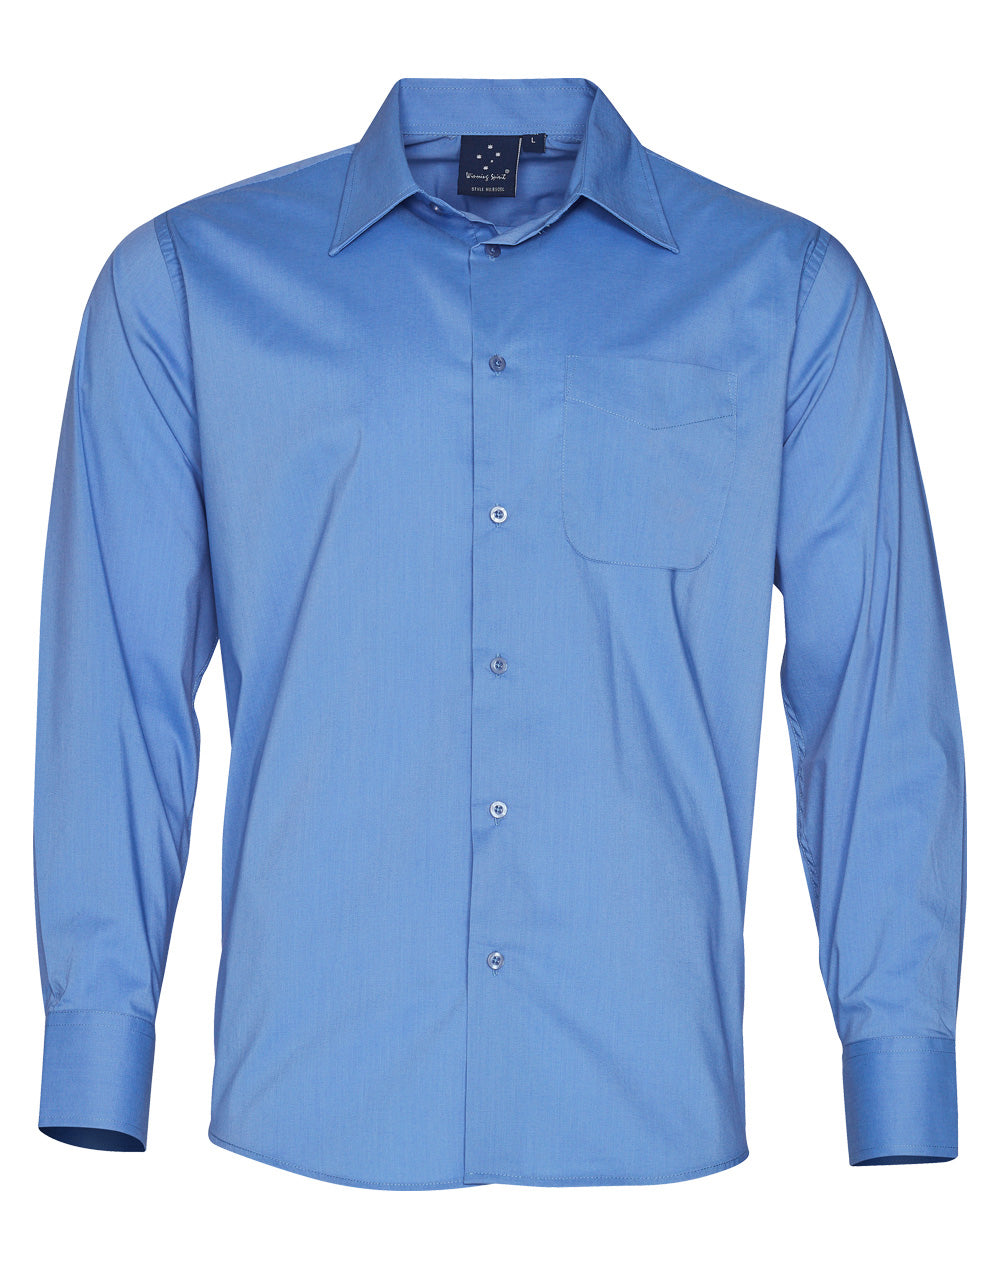 Teflon Business Shirt Long Sleeve - made by AIW